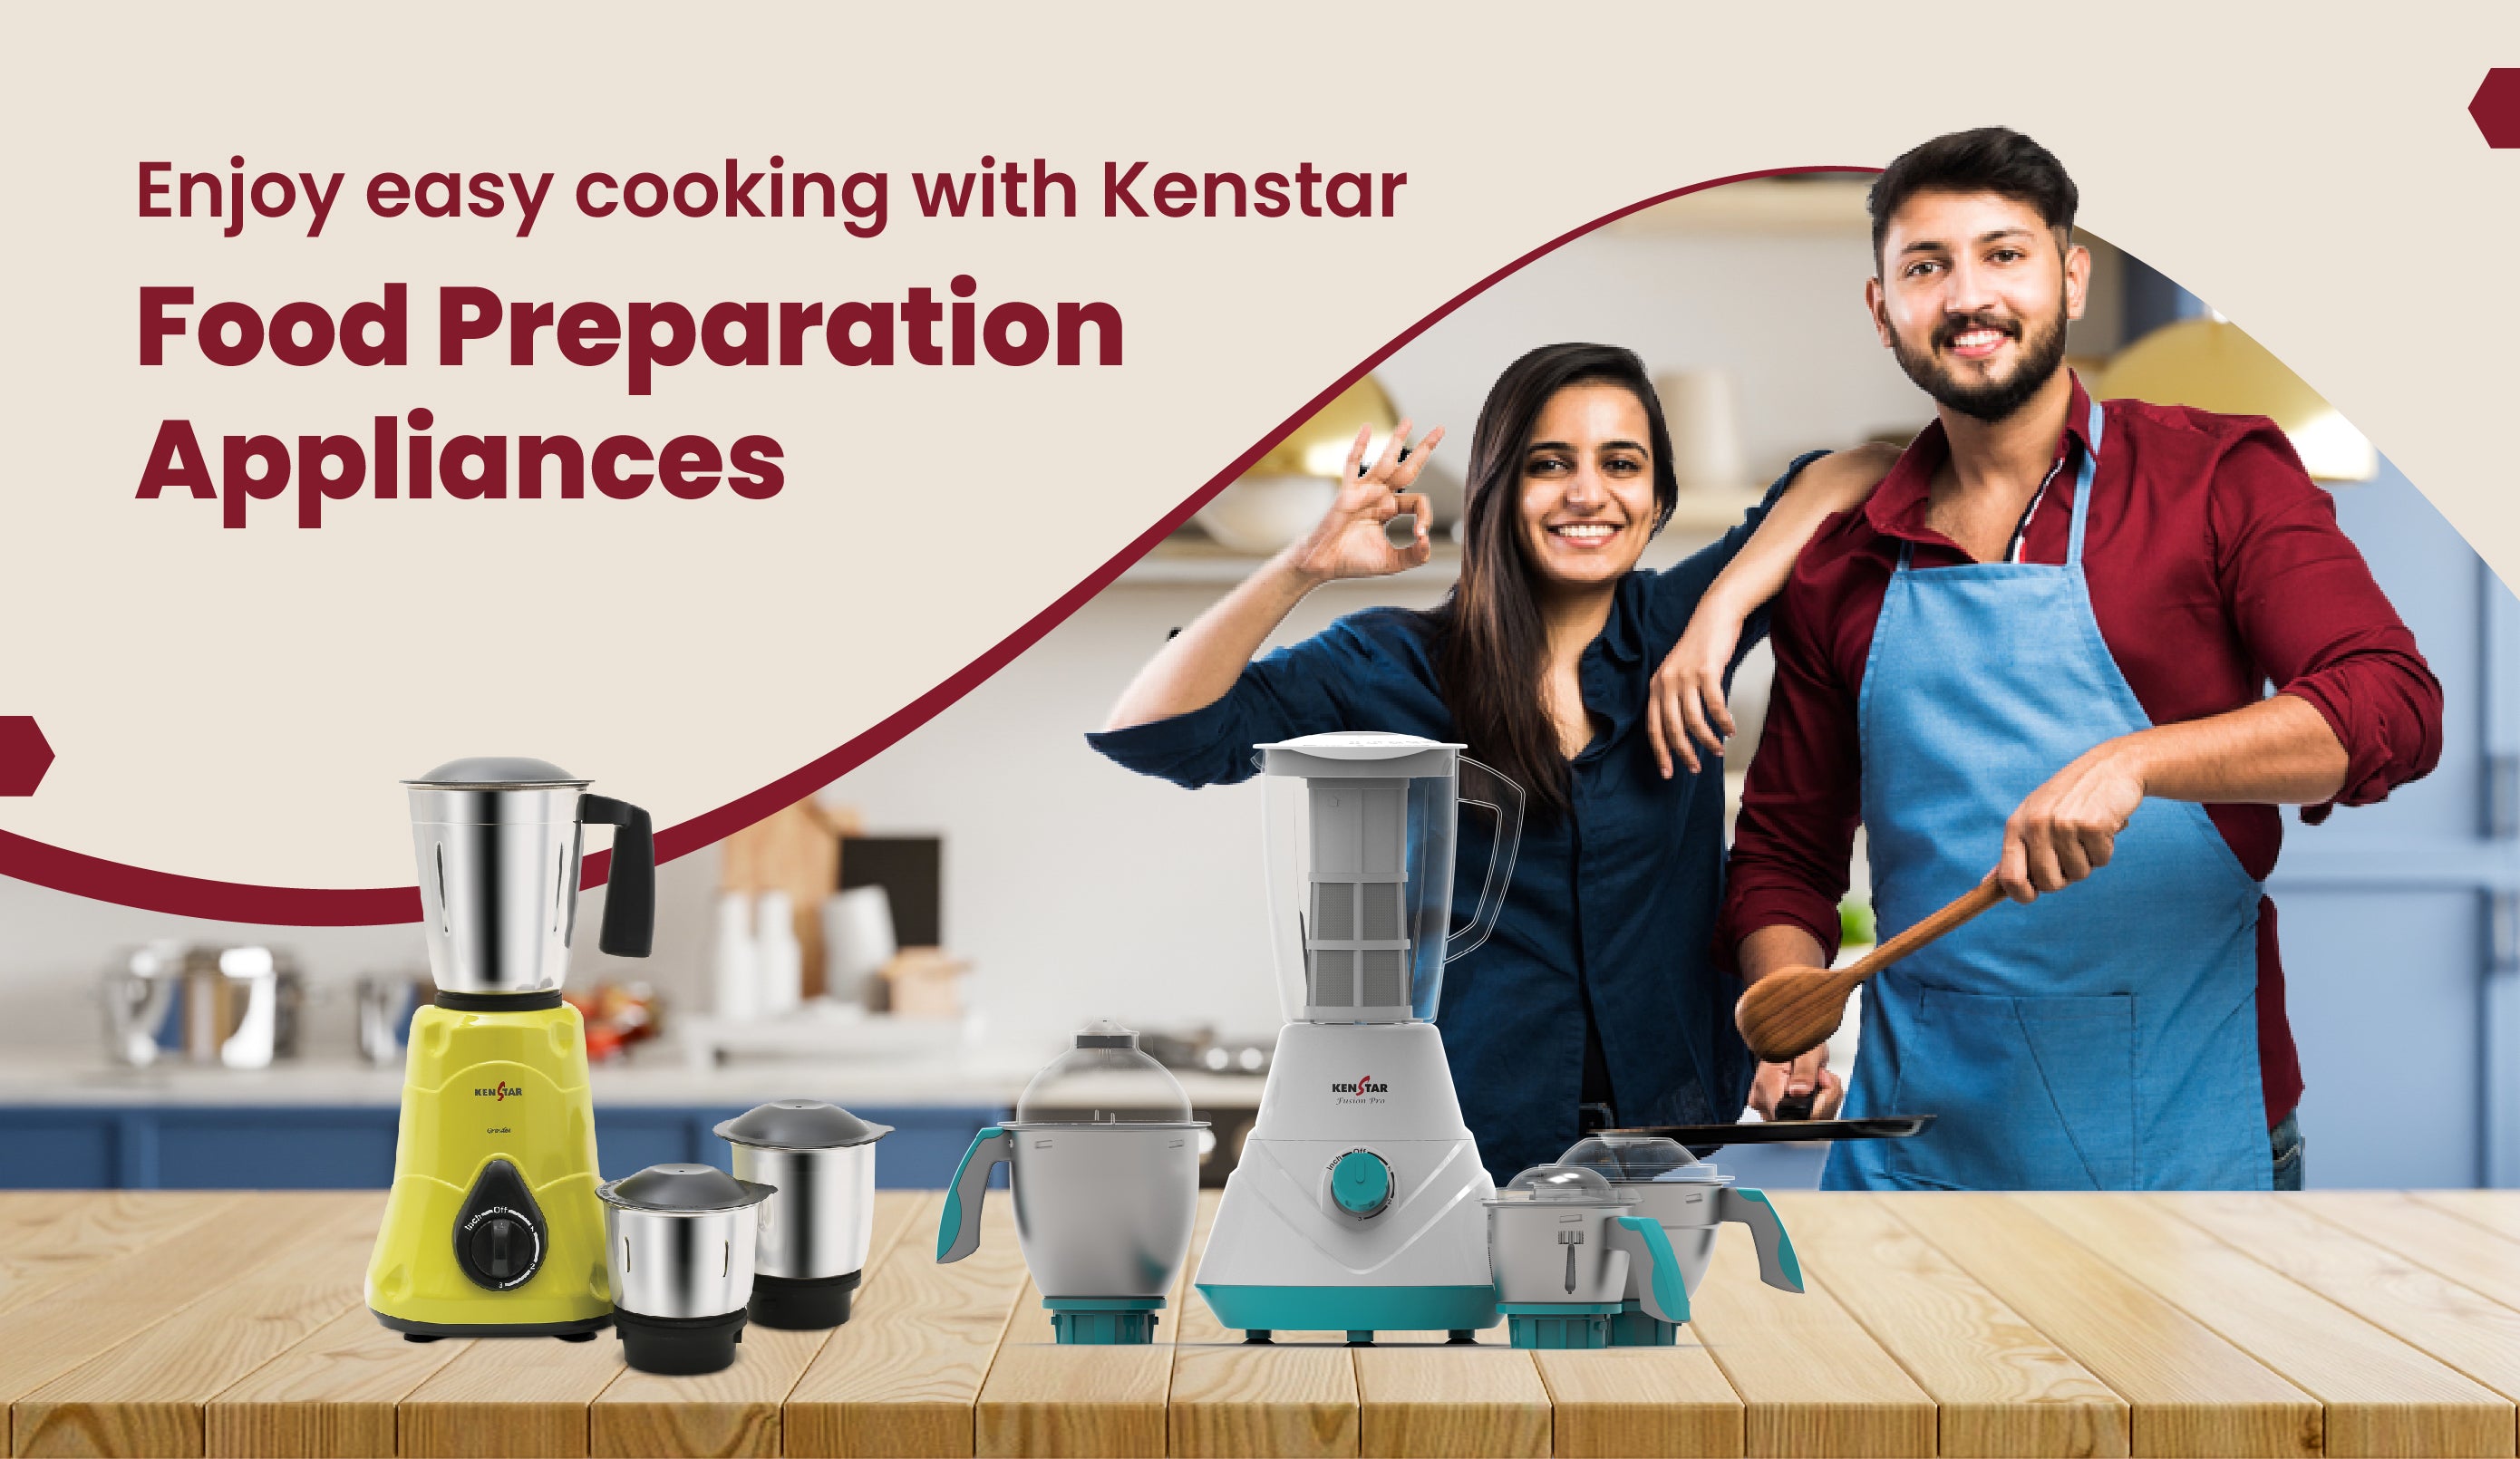 ENJOY EASY COOKING WITH KENSTAR FOOD PREPARATION APPLIANCES